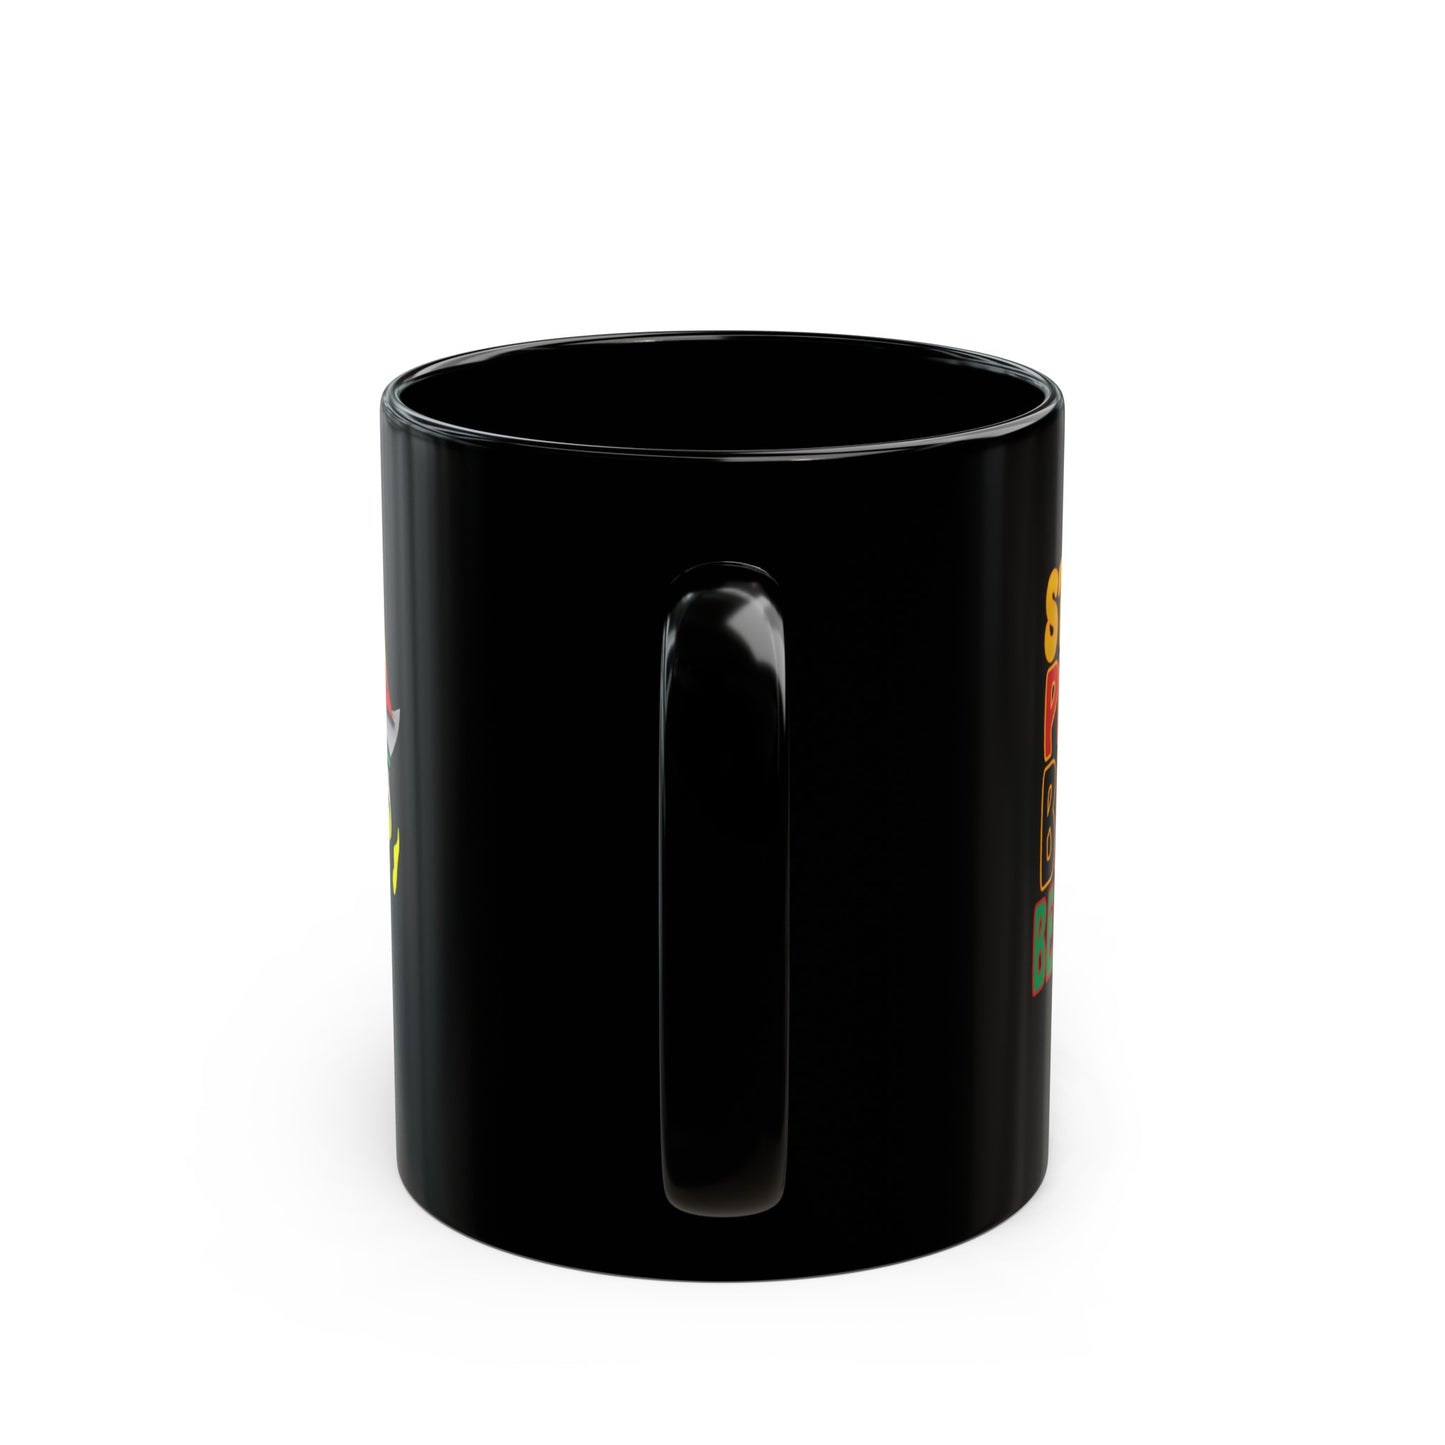 Strong Proud Black | Coffee Mug